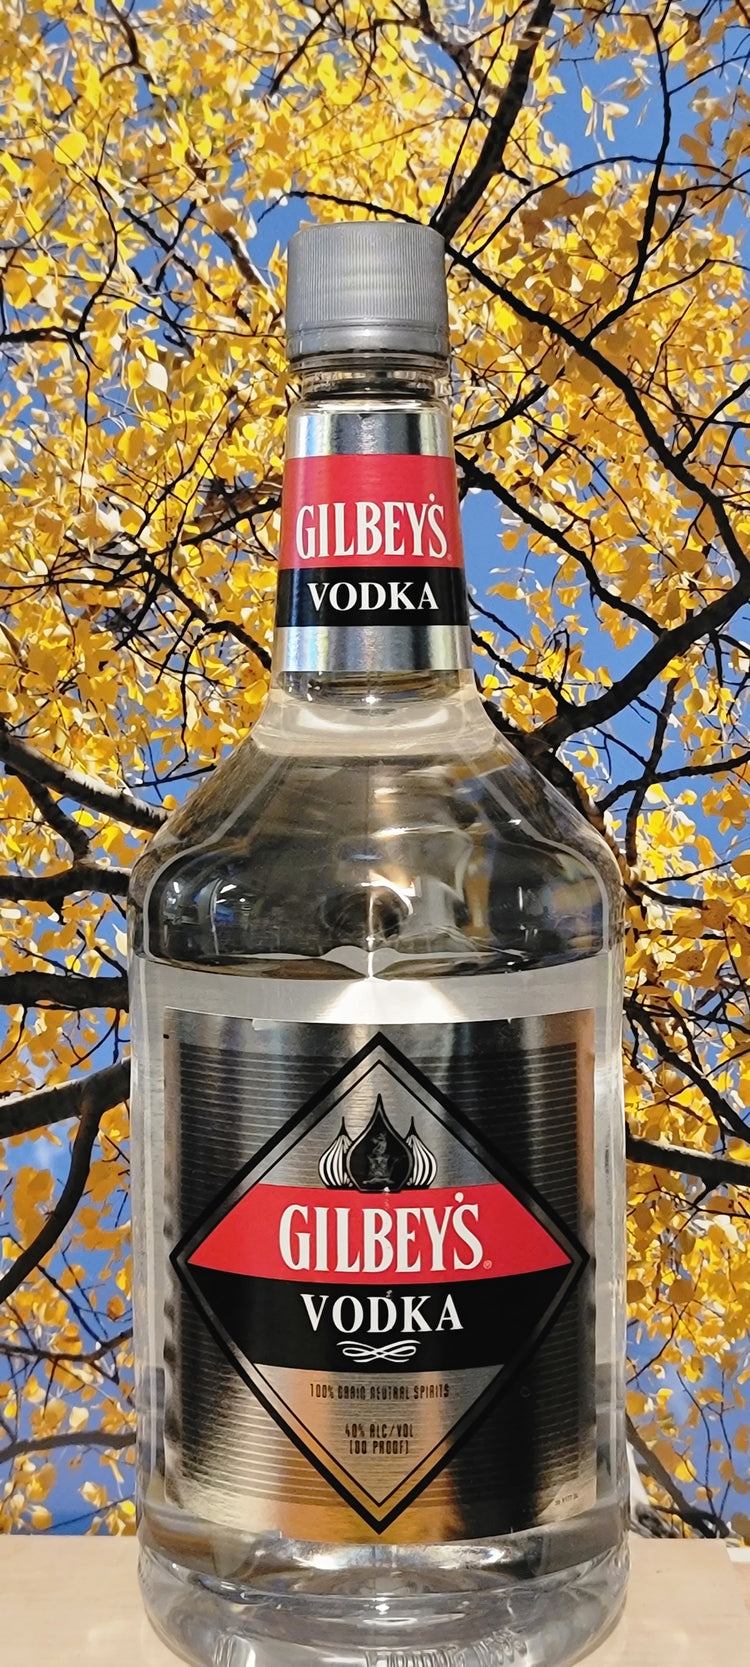 Gilbey's vodka